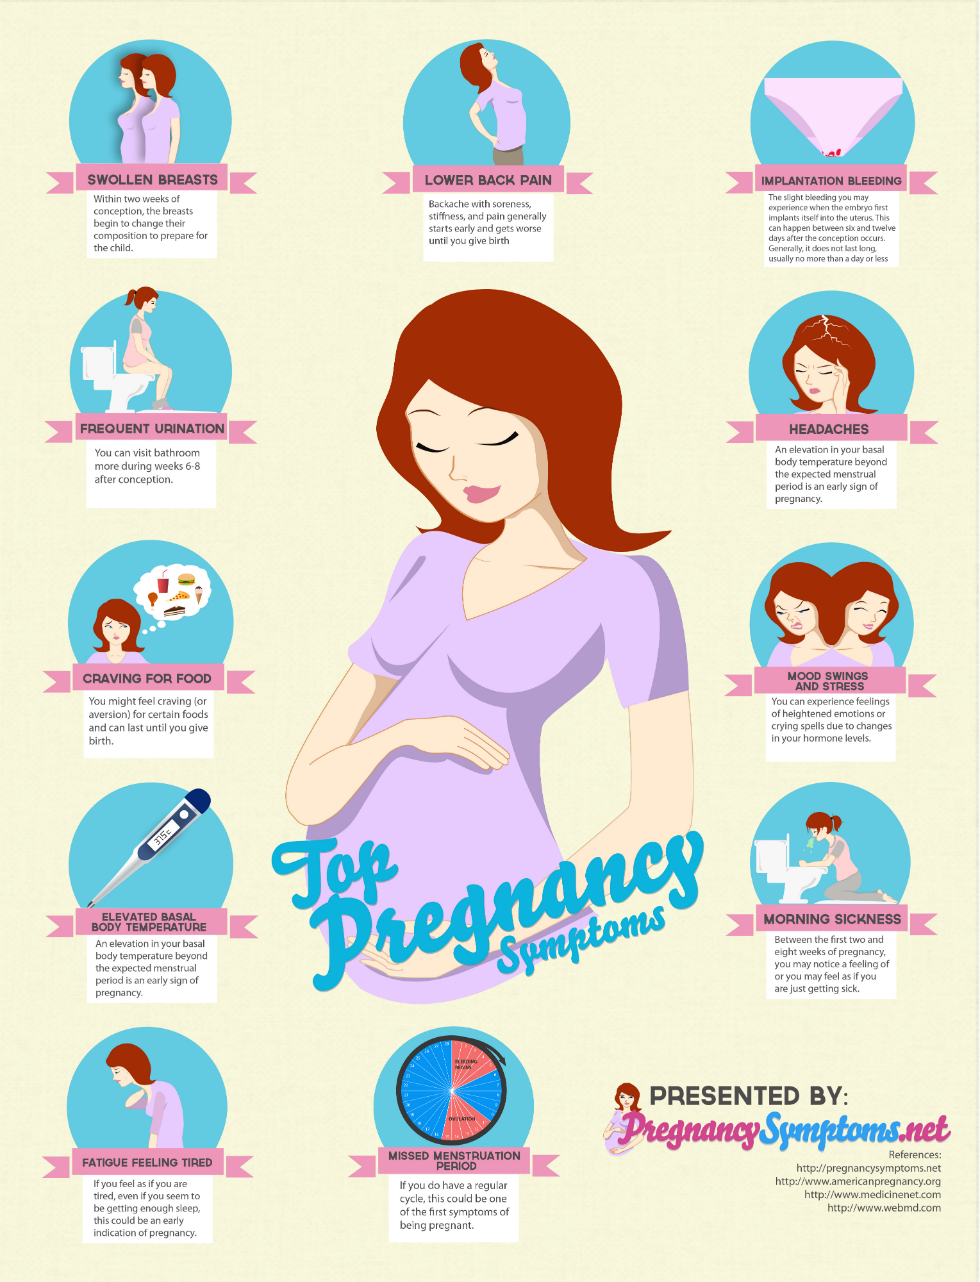 Click Here for pregnancy symptoms